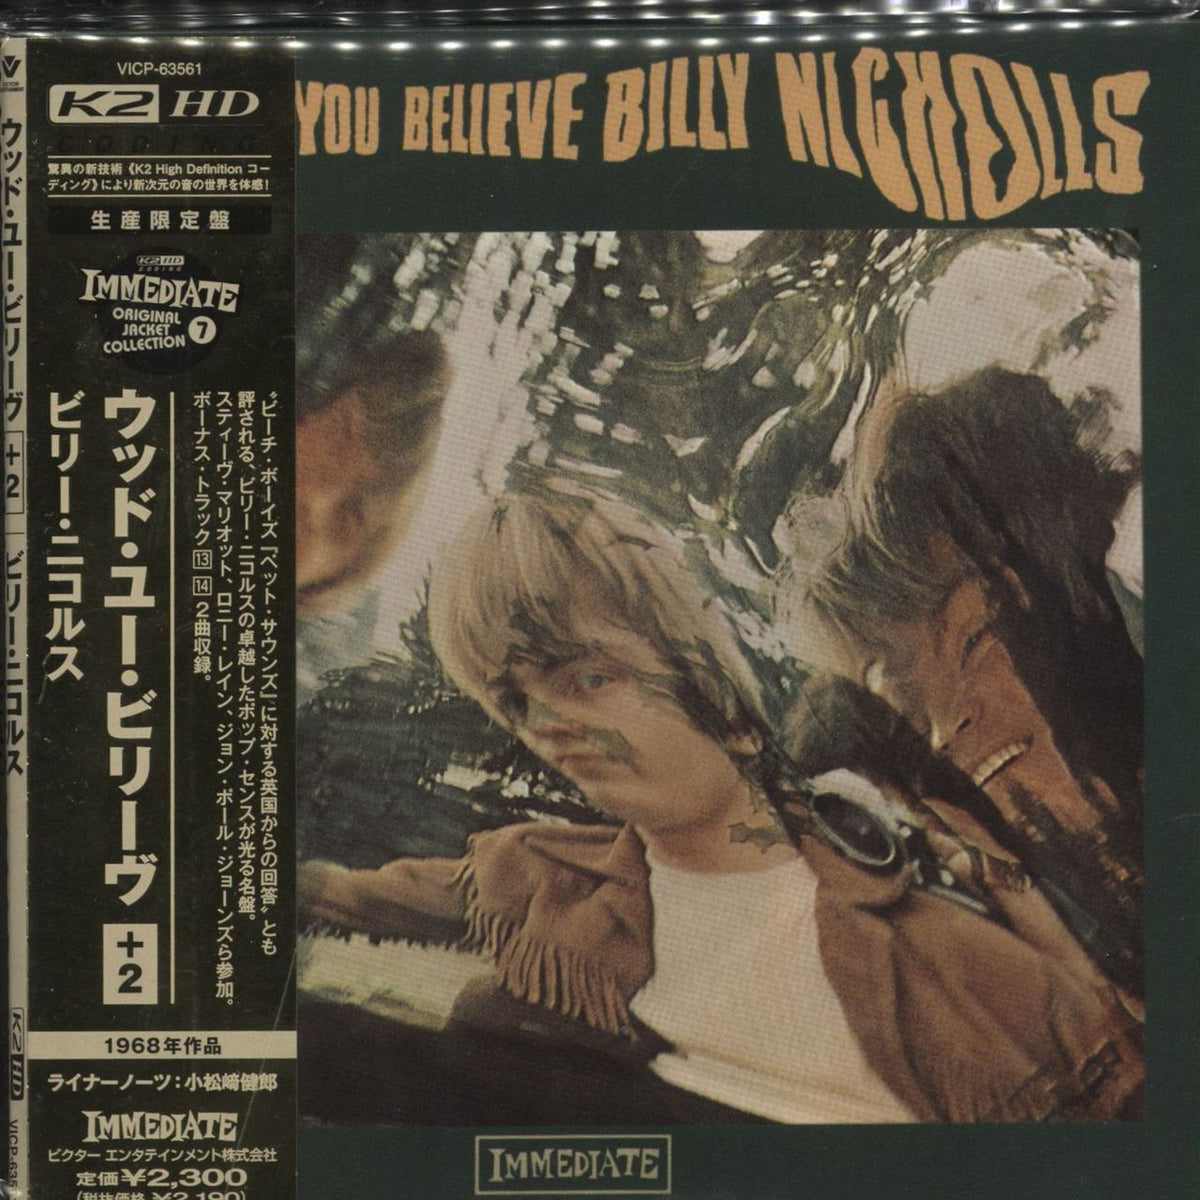 Nicholls Would You Believe Japanese CD album — RareVinyl.com